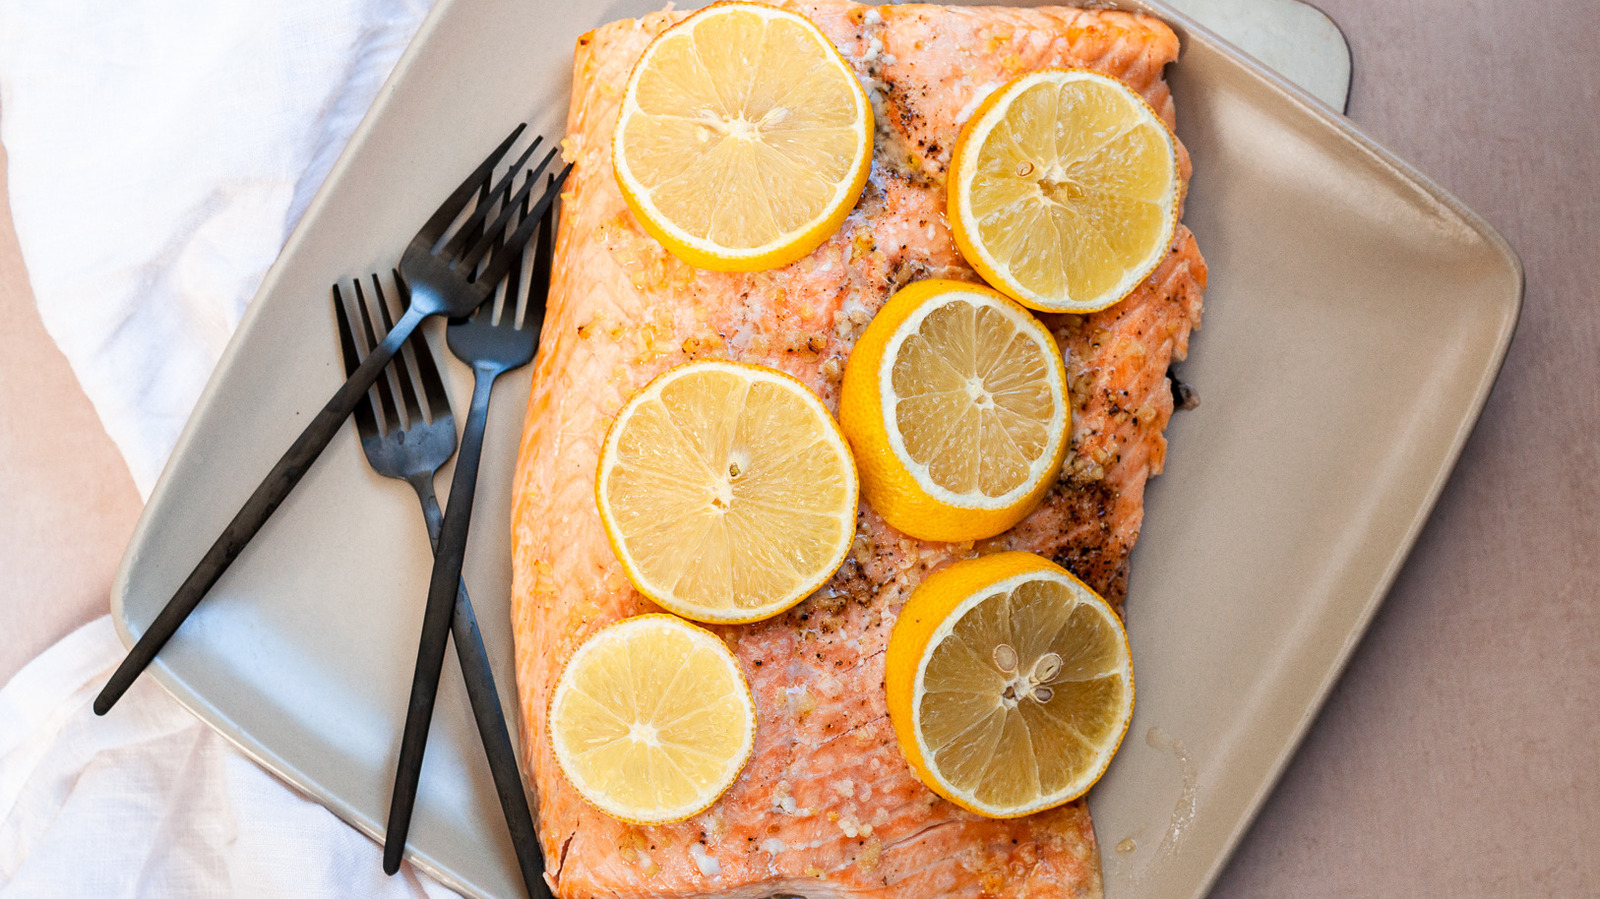 Lemon-Garlic Baked Salmon Recipe - Tasting Table